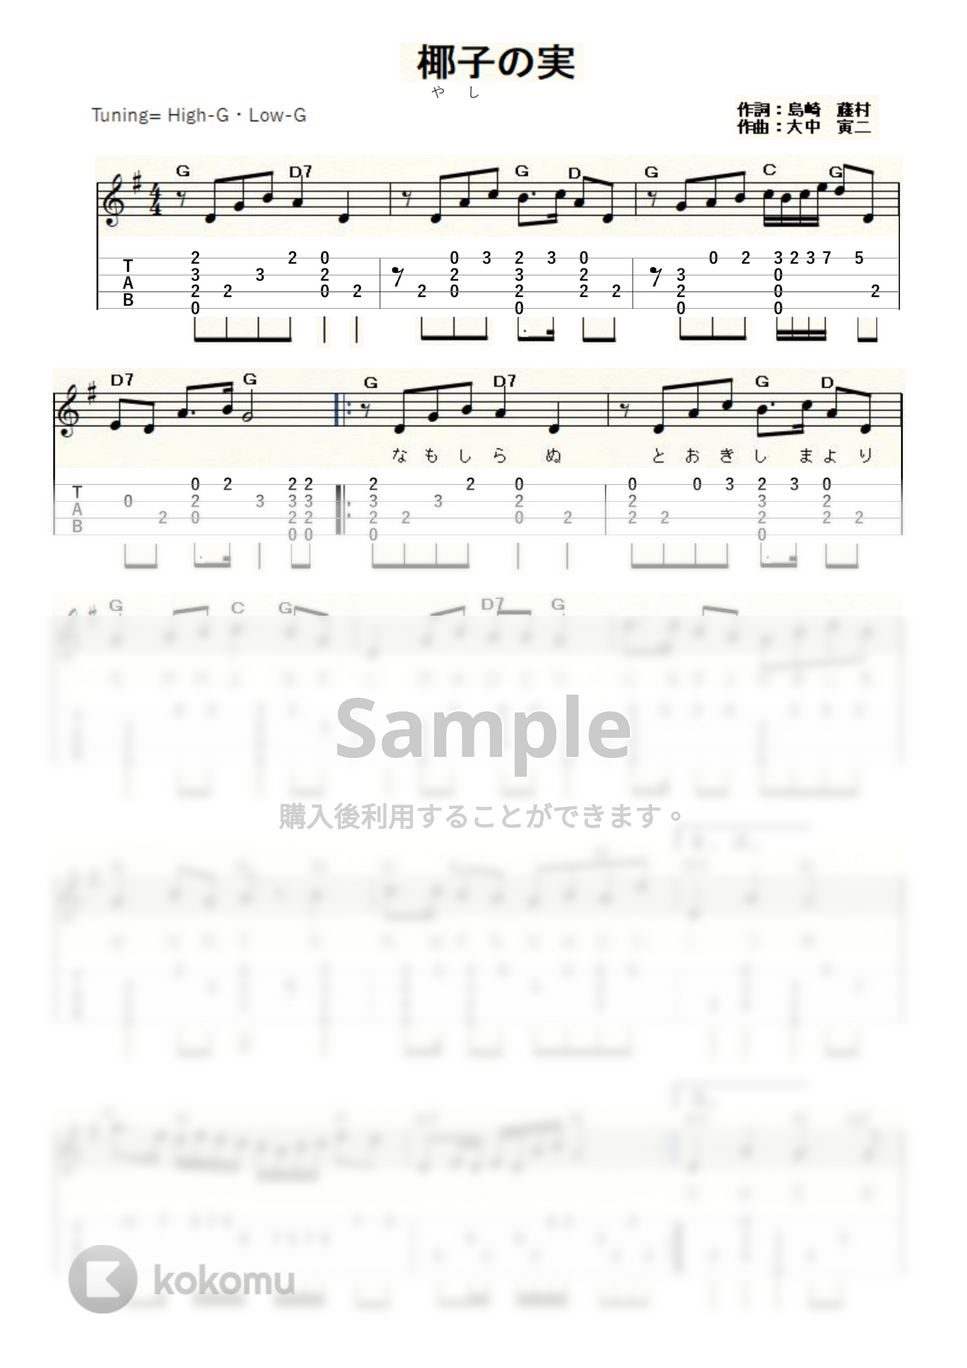 島崎藤村 - 椰子の実 (ｳｸﾚﾚｿﾛ / High-G,Low-G / 初～中級) by ukulelepapa